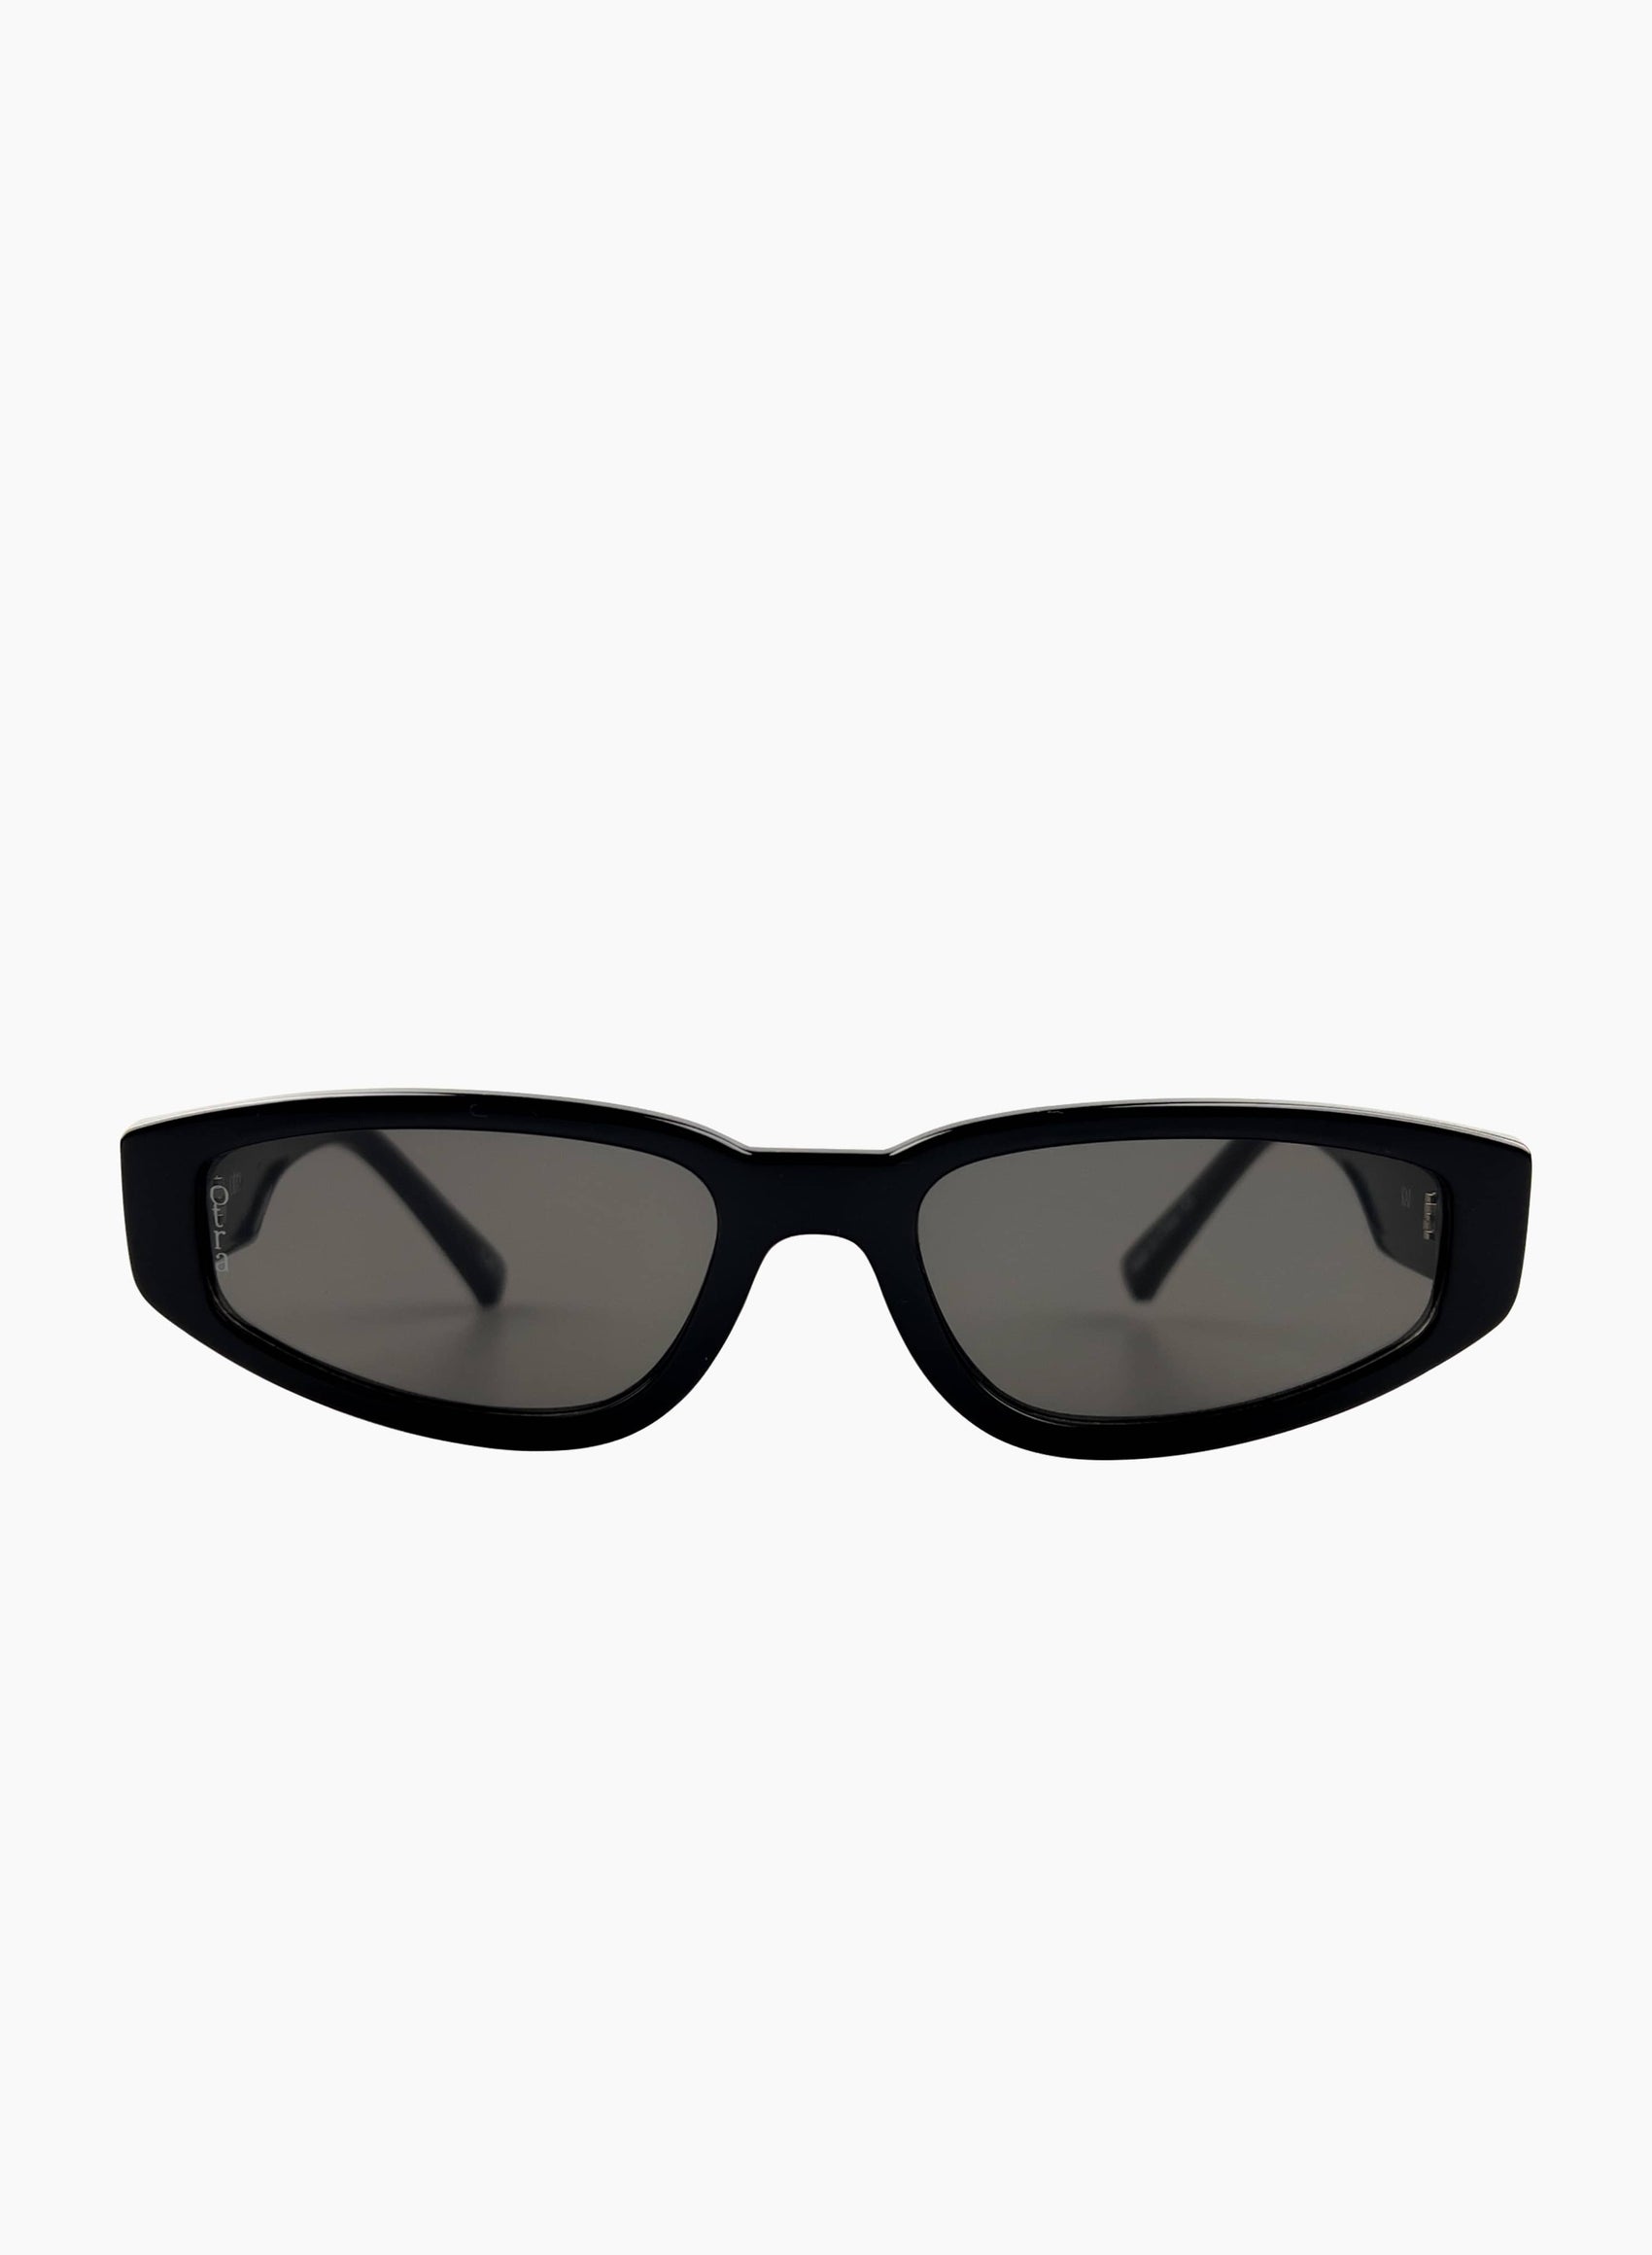 KAI thin cat eye sunglasses in black